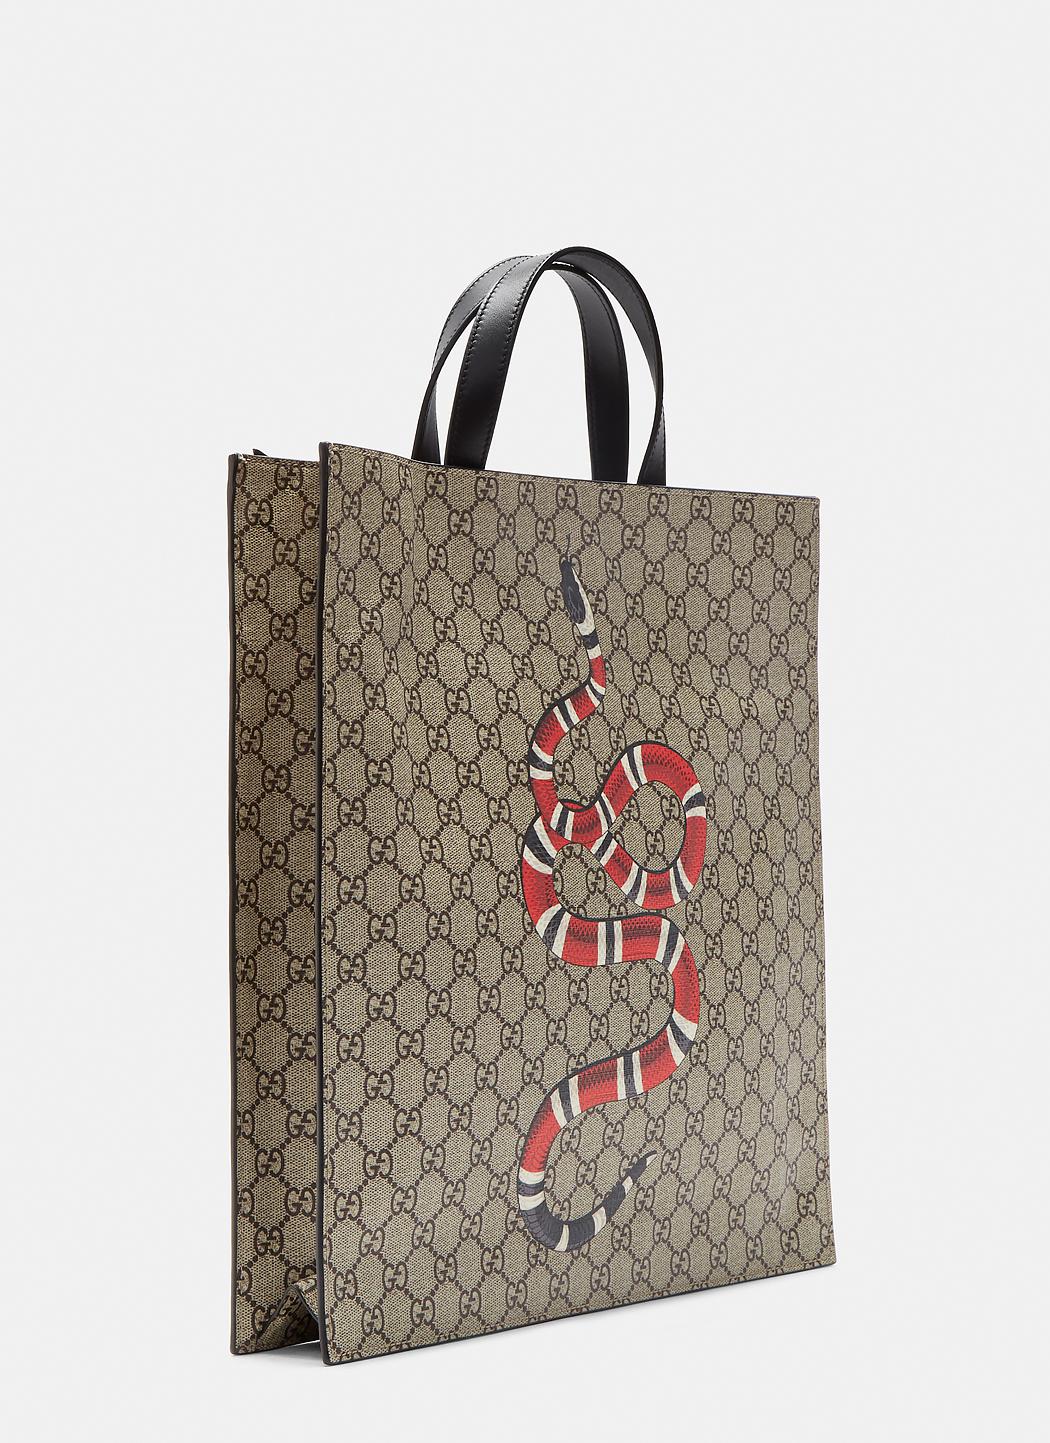 Lyst - Gucci Men's Snake Print Gg Supreme Tote Bag In Brown in Brown